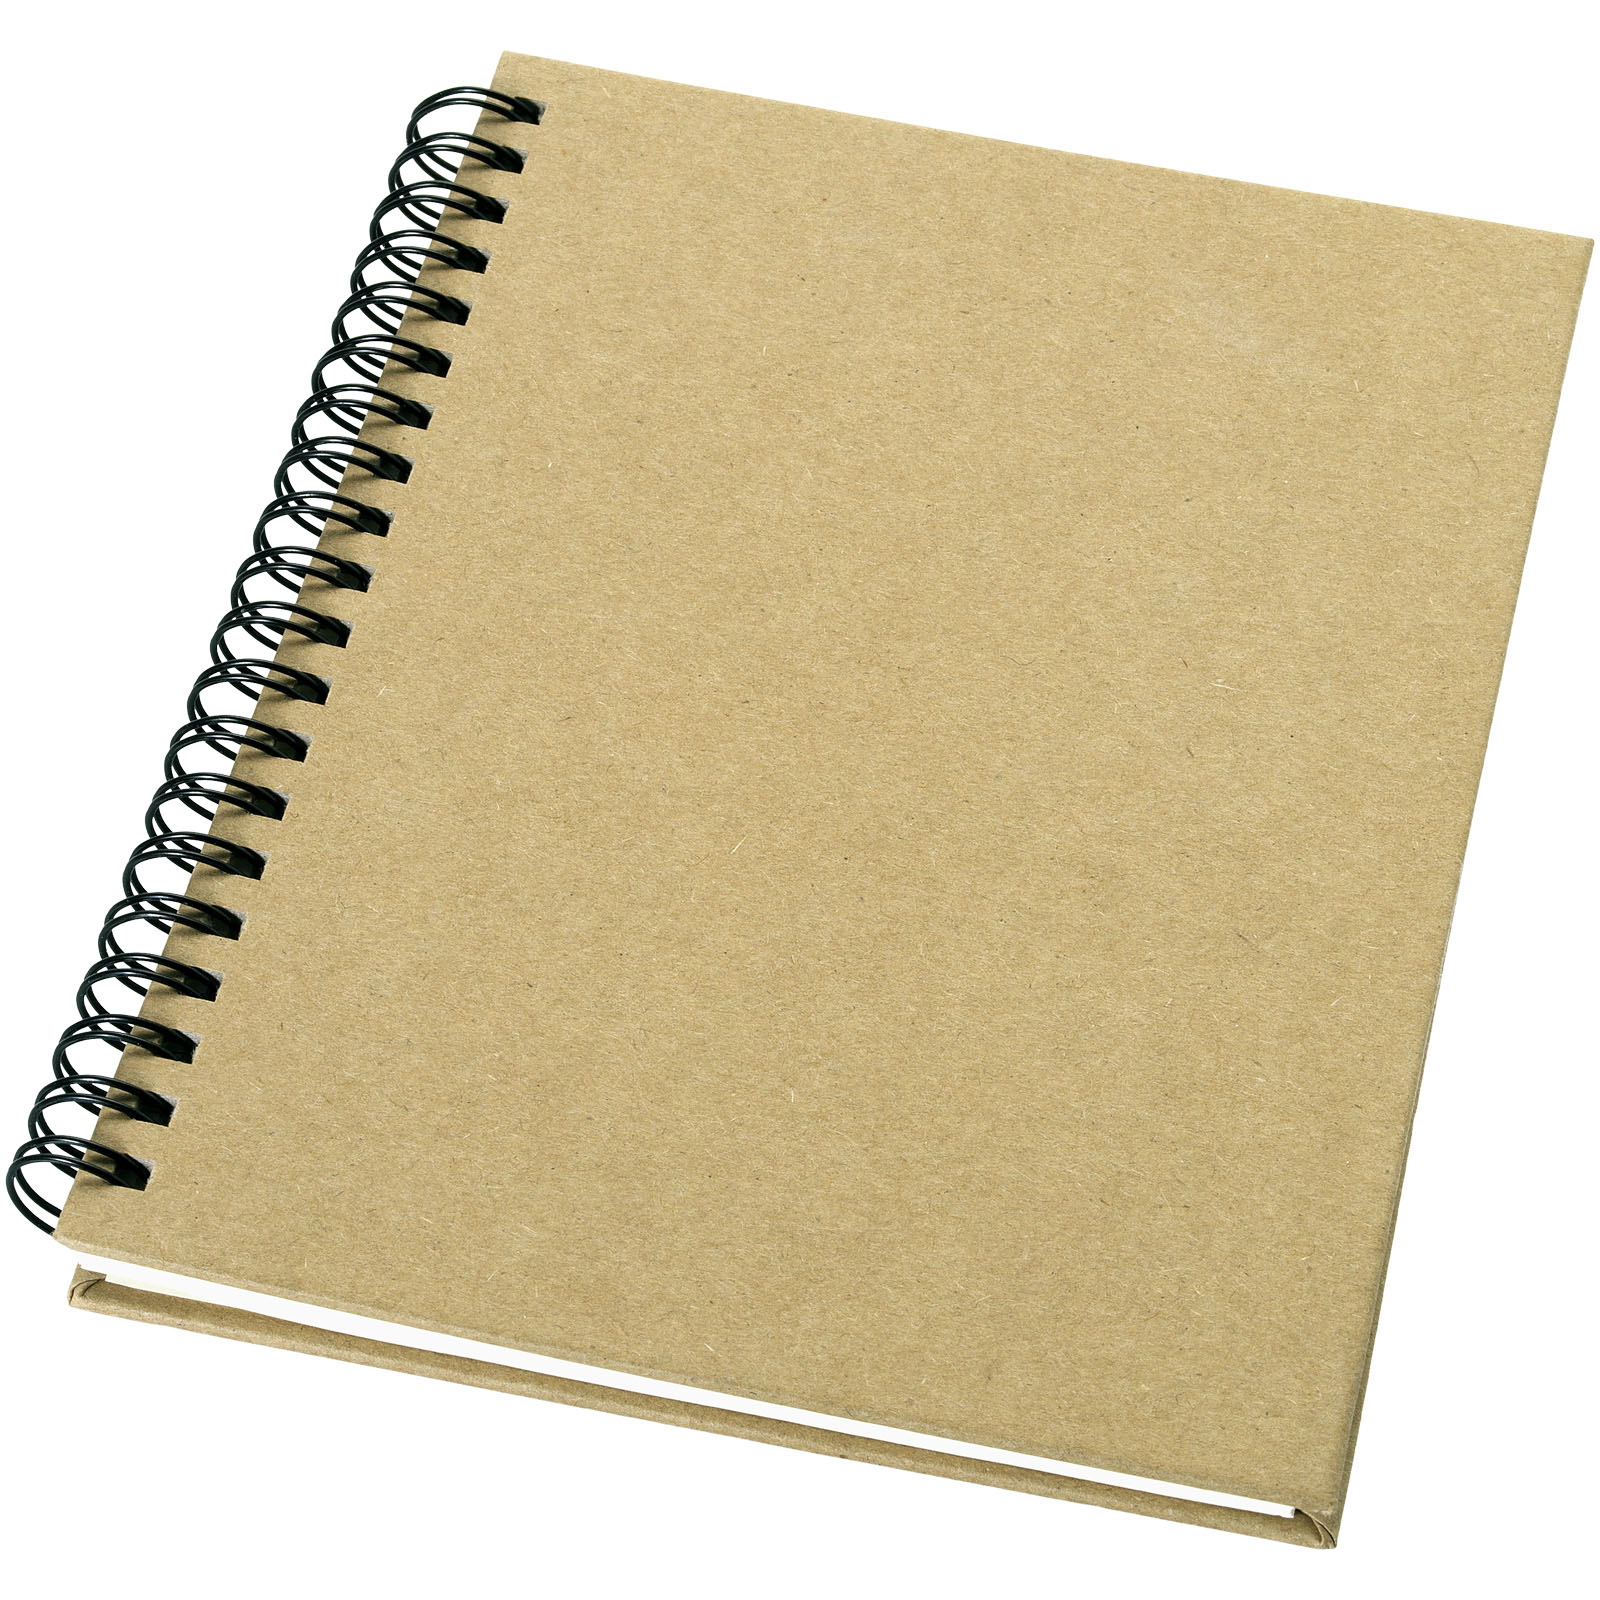 Notebooks & Desk Essentials - Mendel recycled notebook